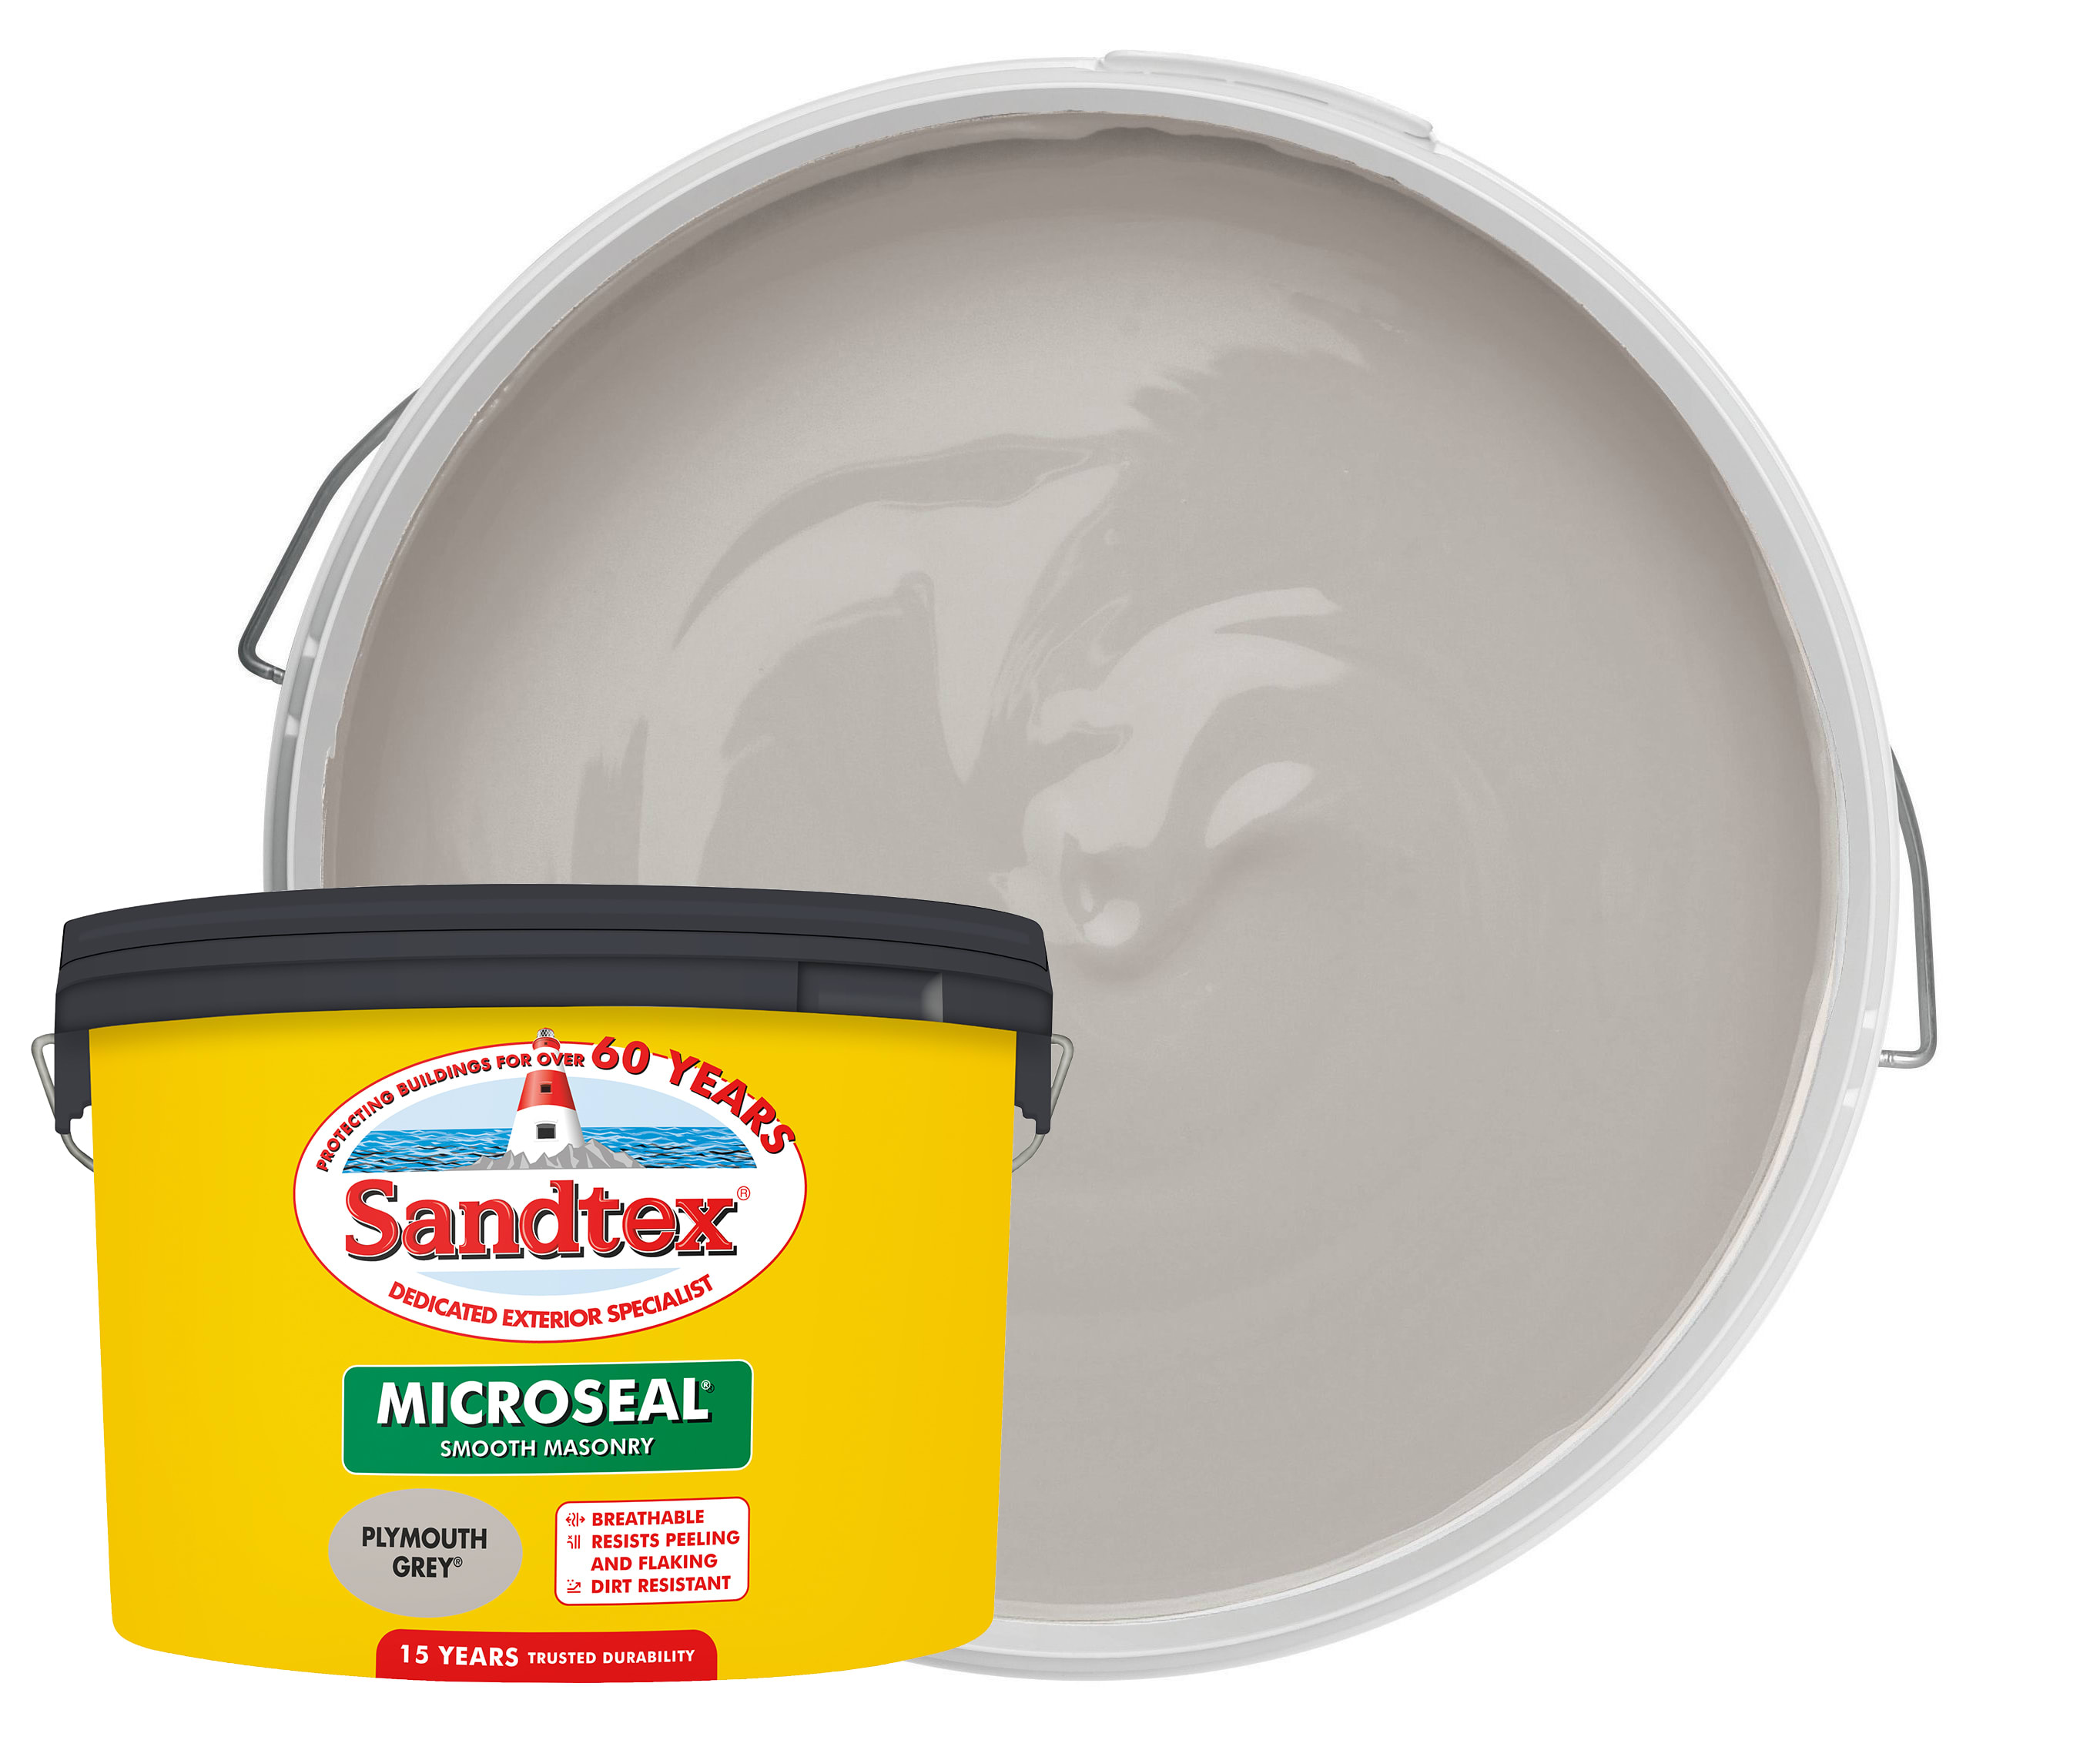 Image of Sandtex Microseal Ultra Smooth Weatherproof Masonry 15 Year Exterior Wall Paint - Plymouth Grey - 10L